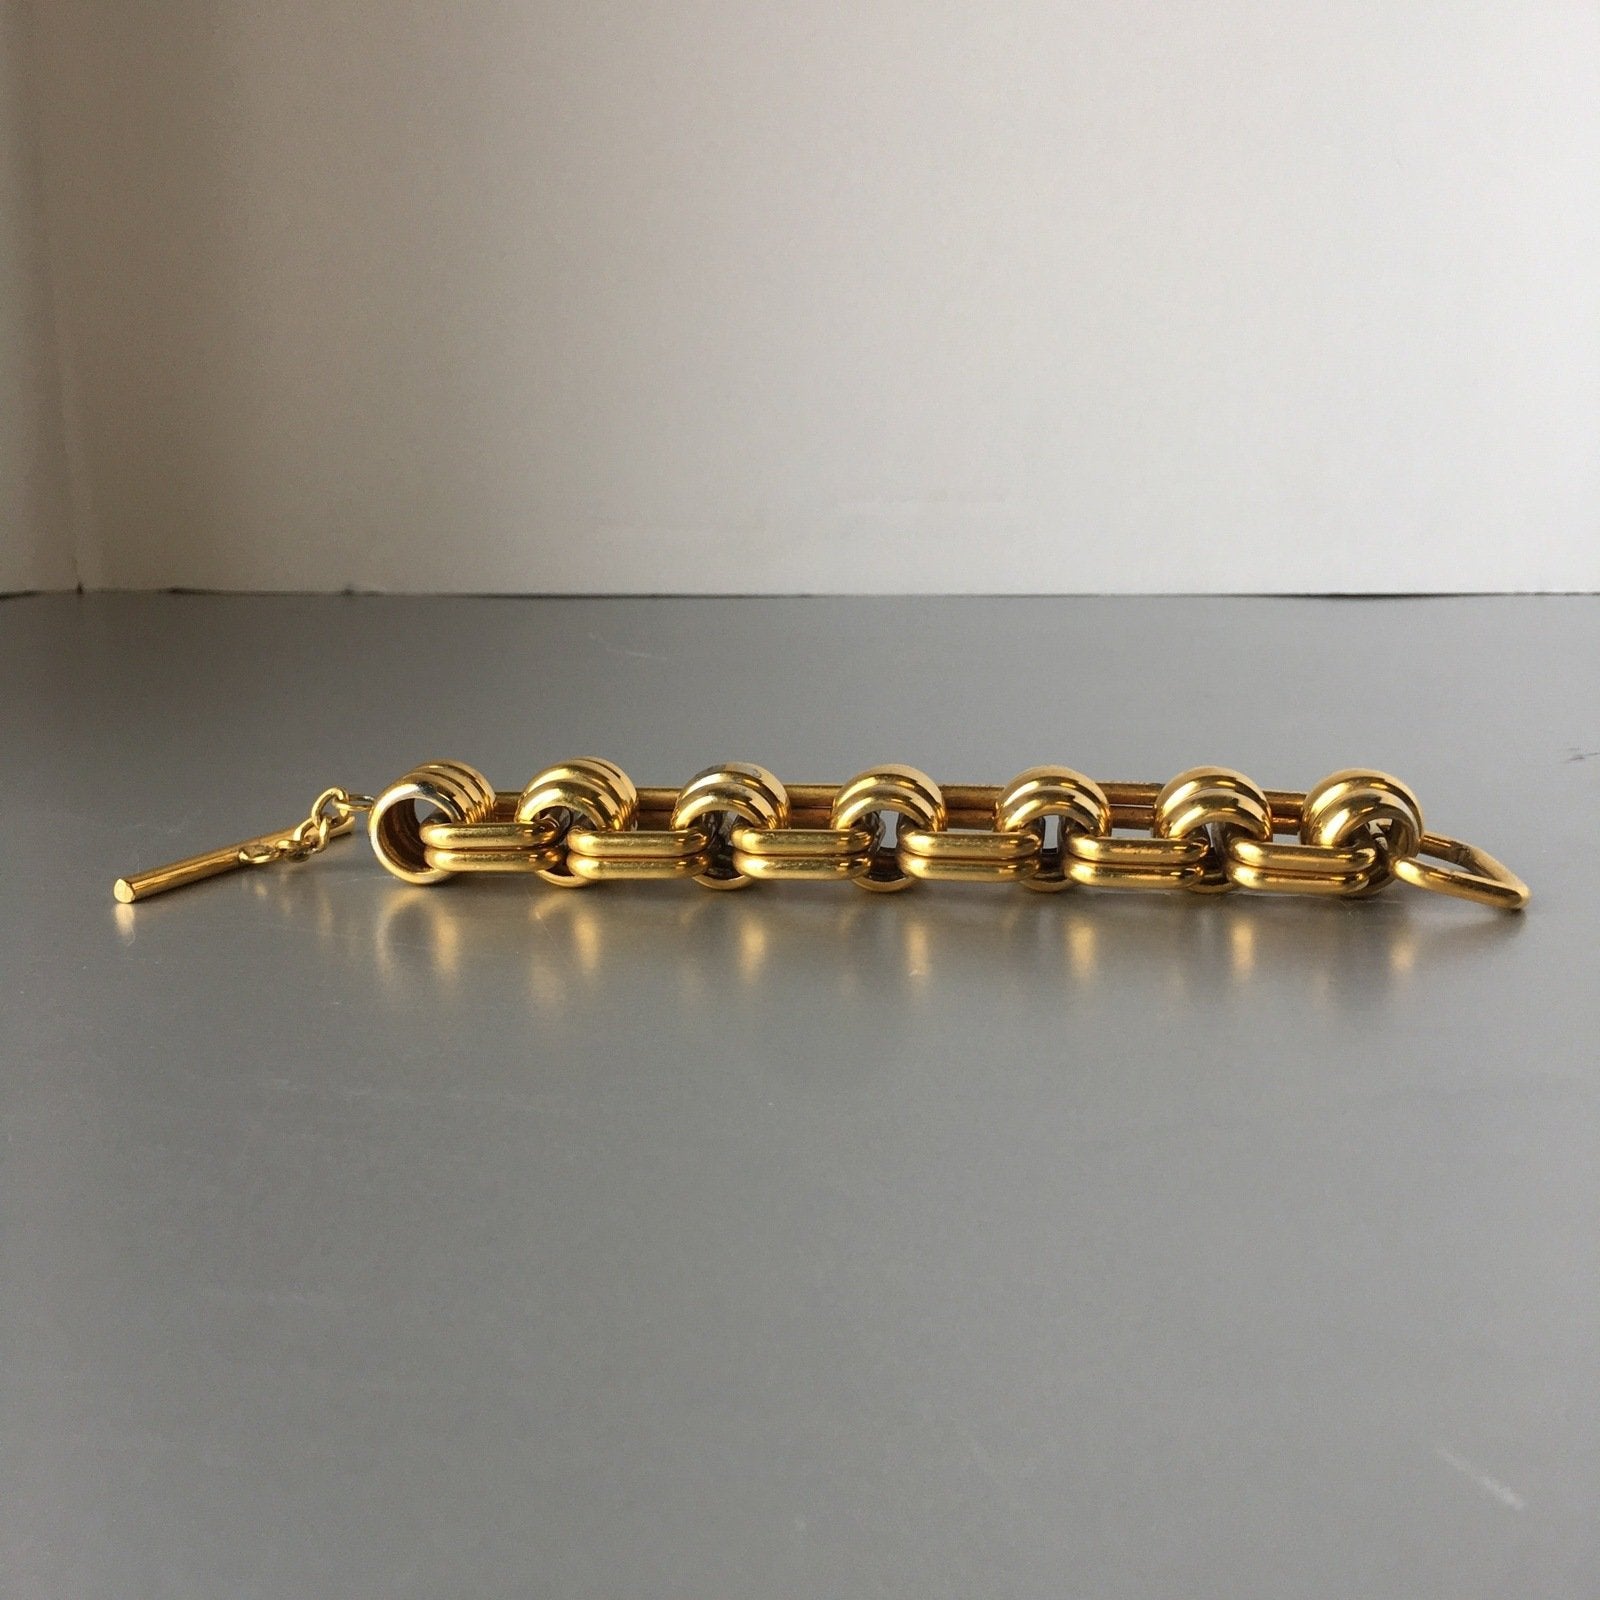 Golden Link Chain Bracelet Vintage Costume Jewelry